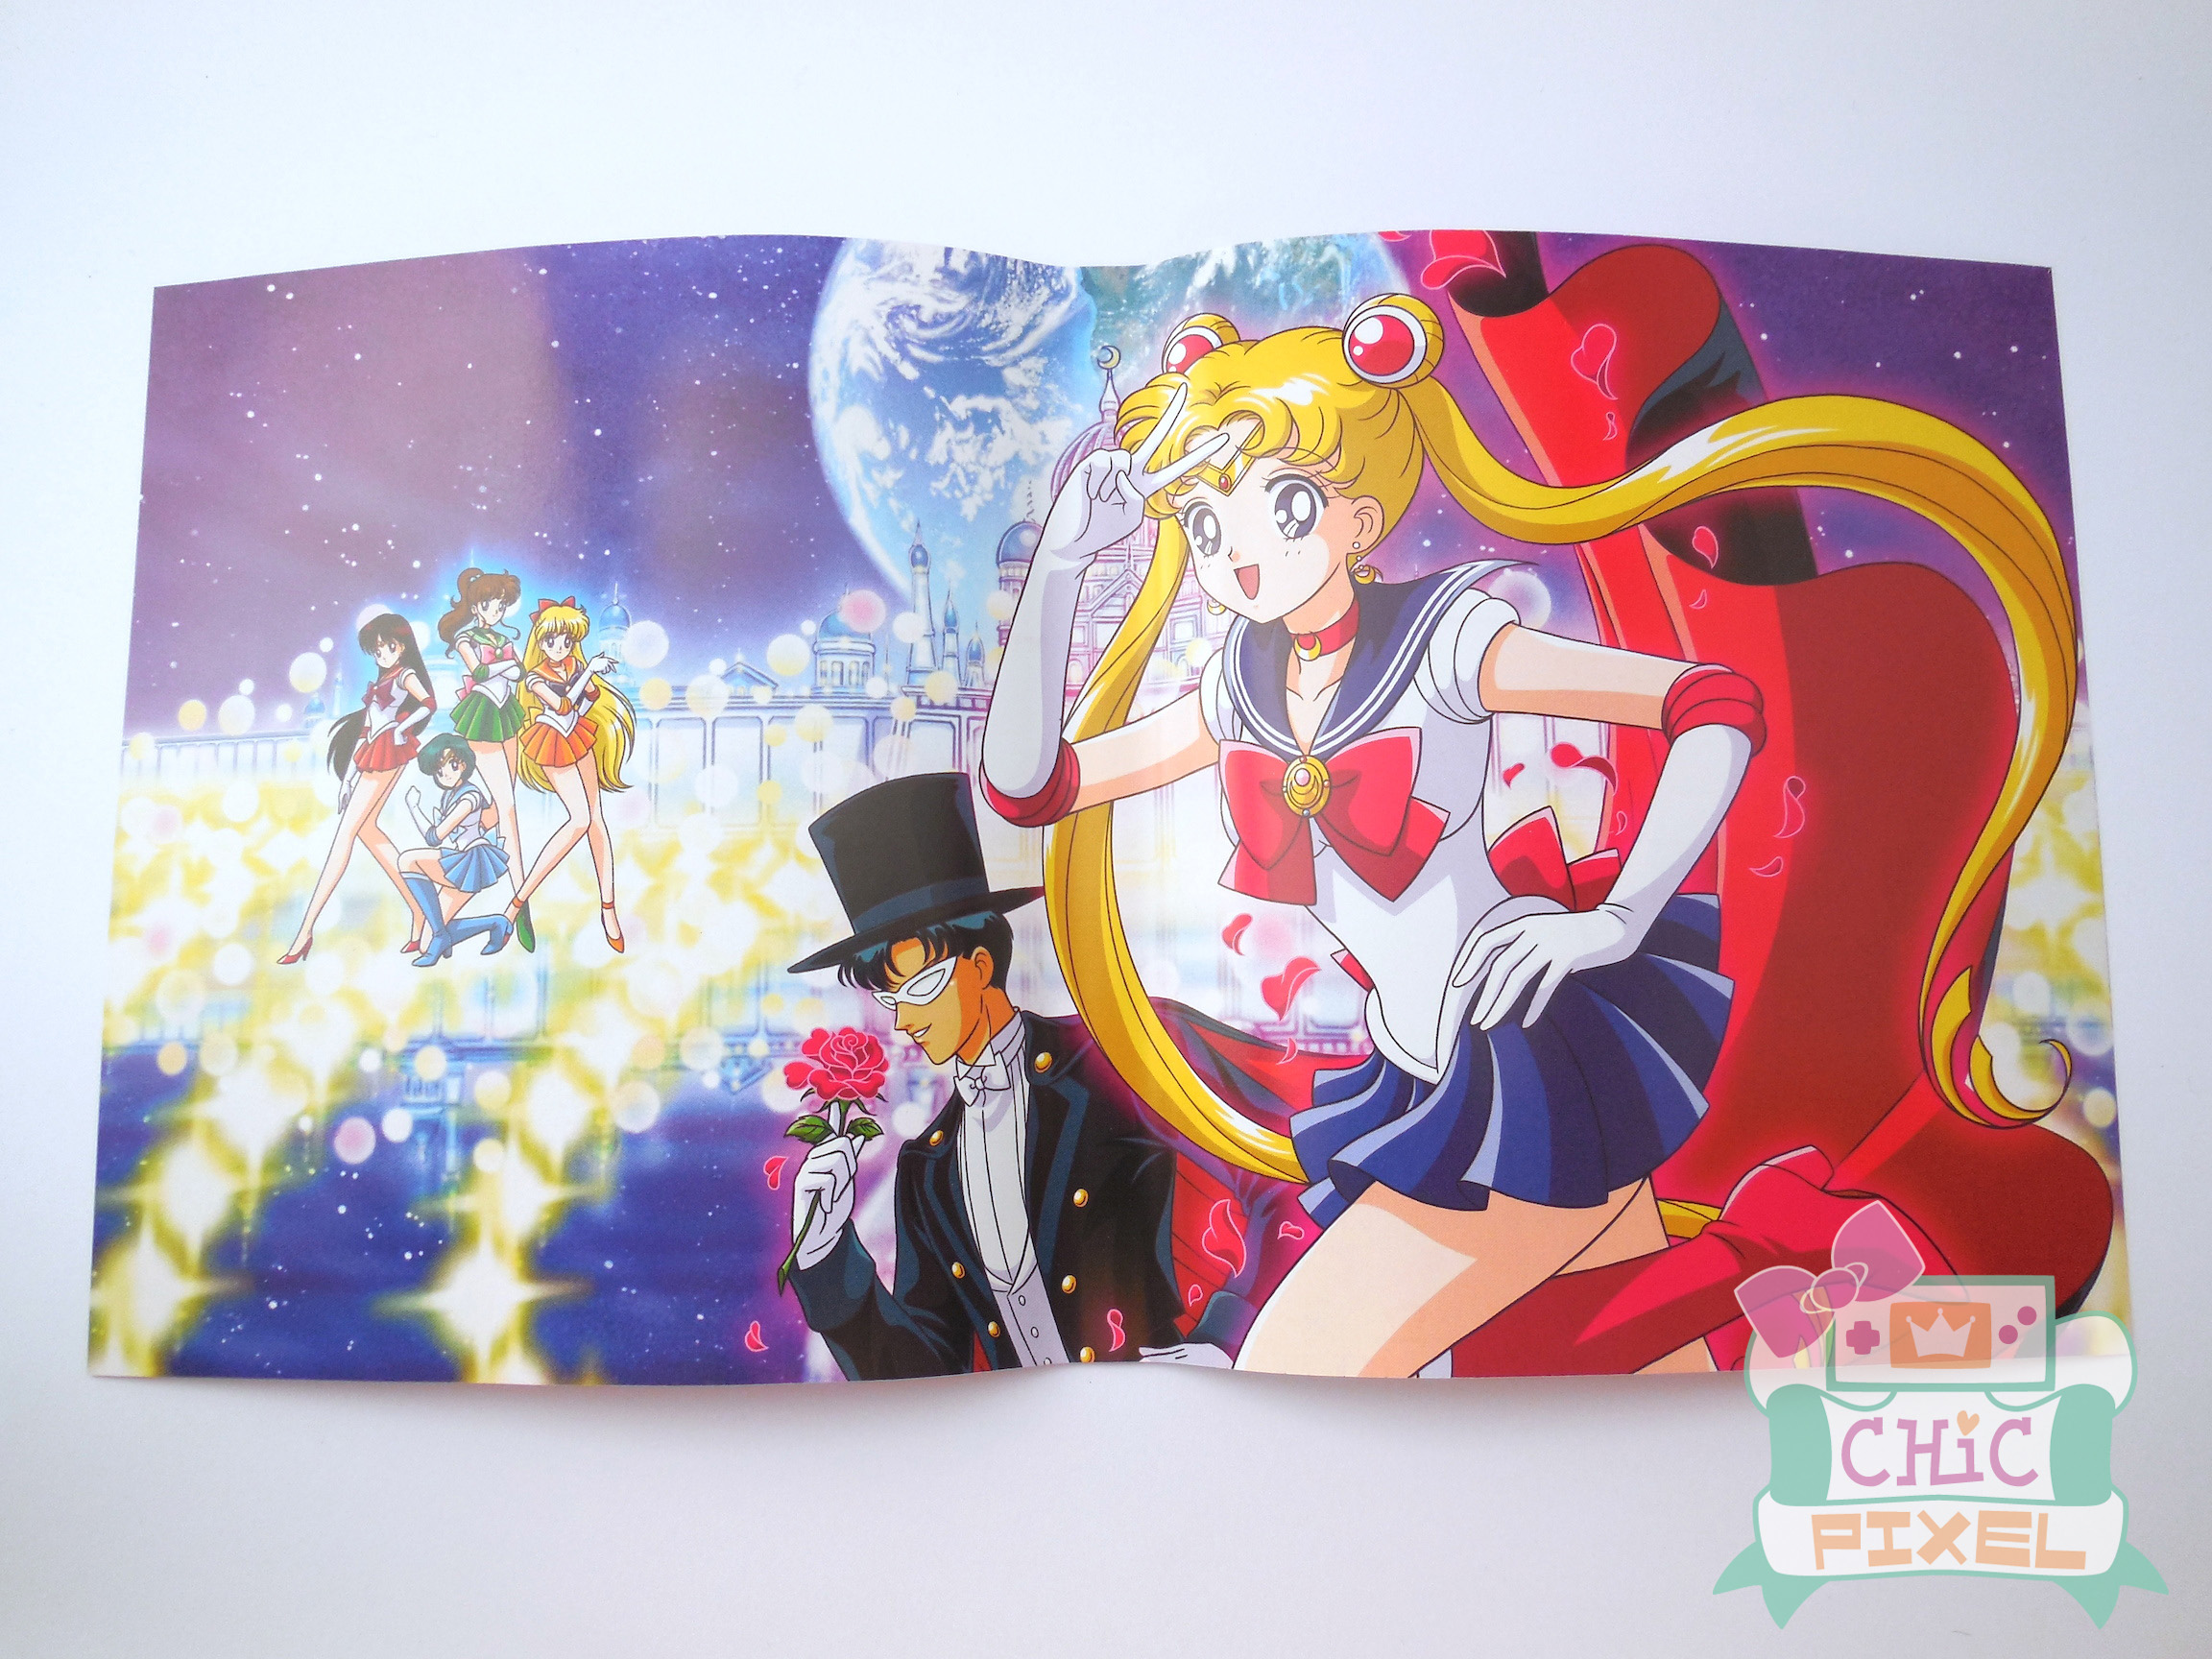 Sailor Moon Season 1, Set 2 DVD/Blu-Ray Combo Pack Alternate Box Art